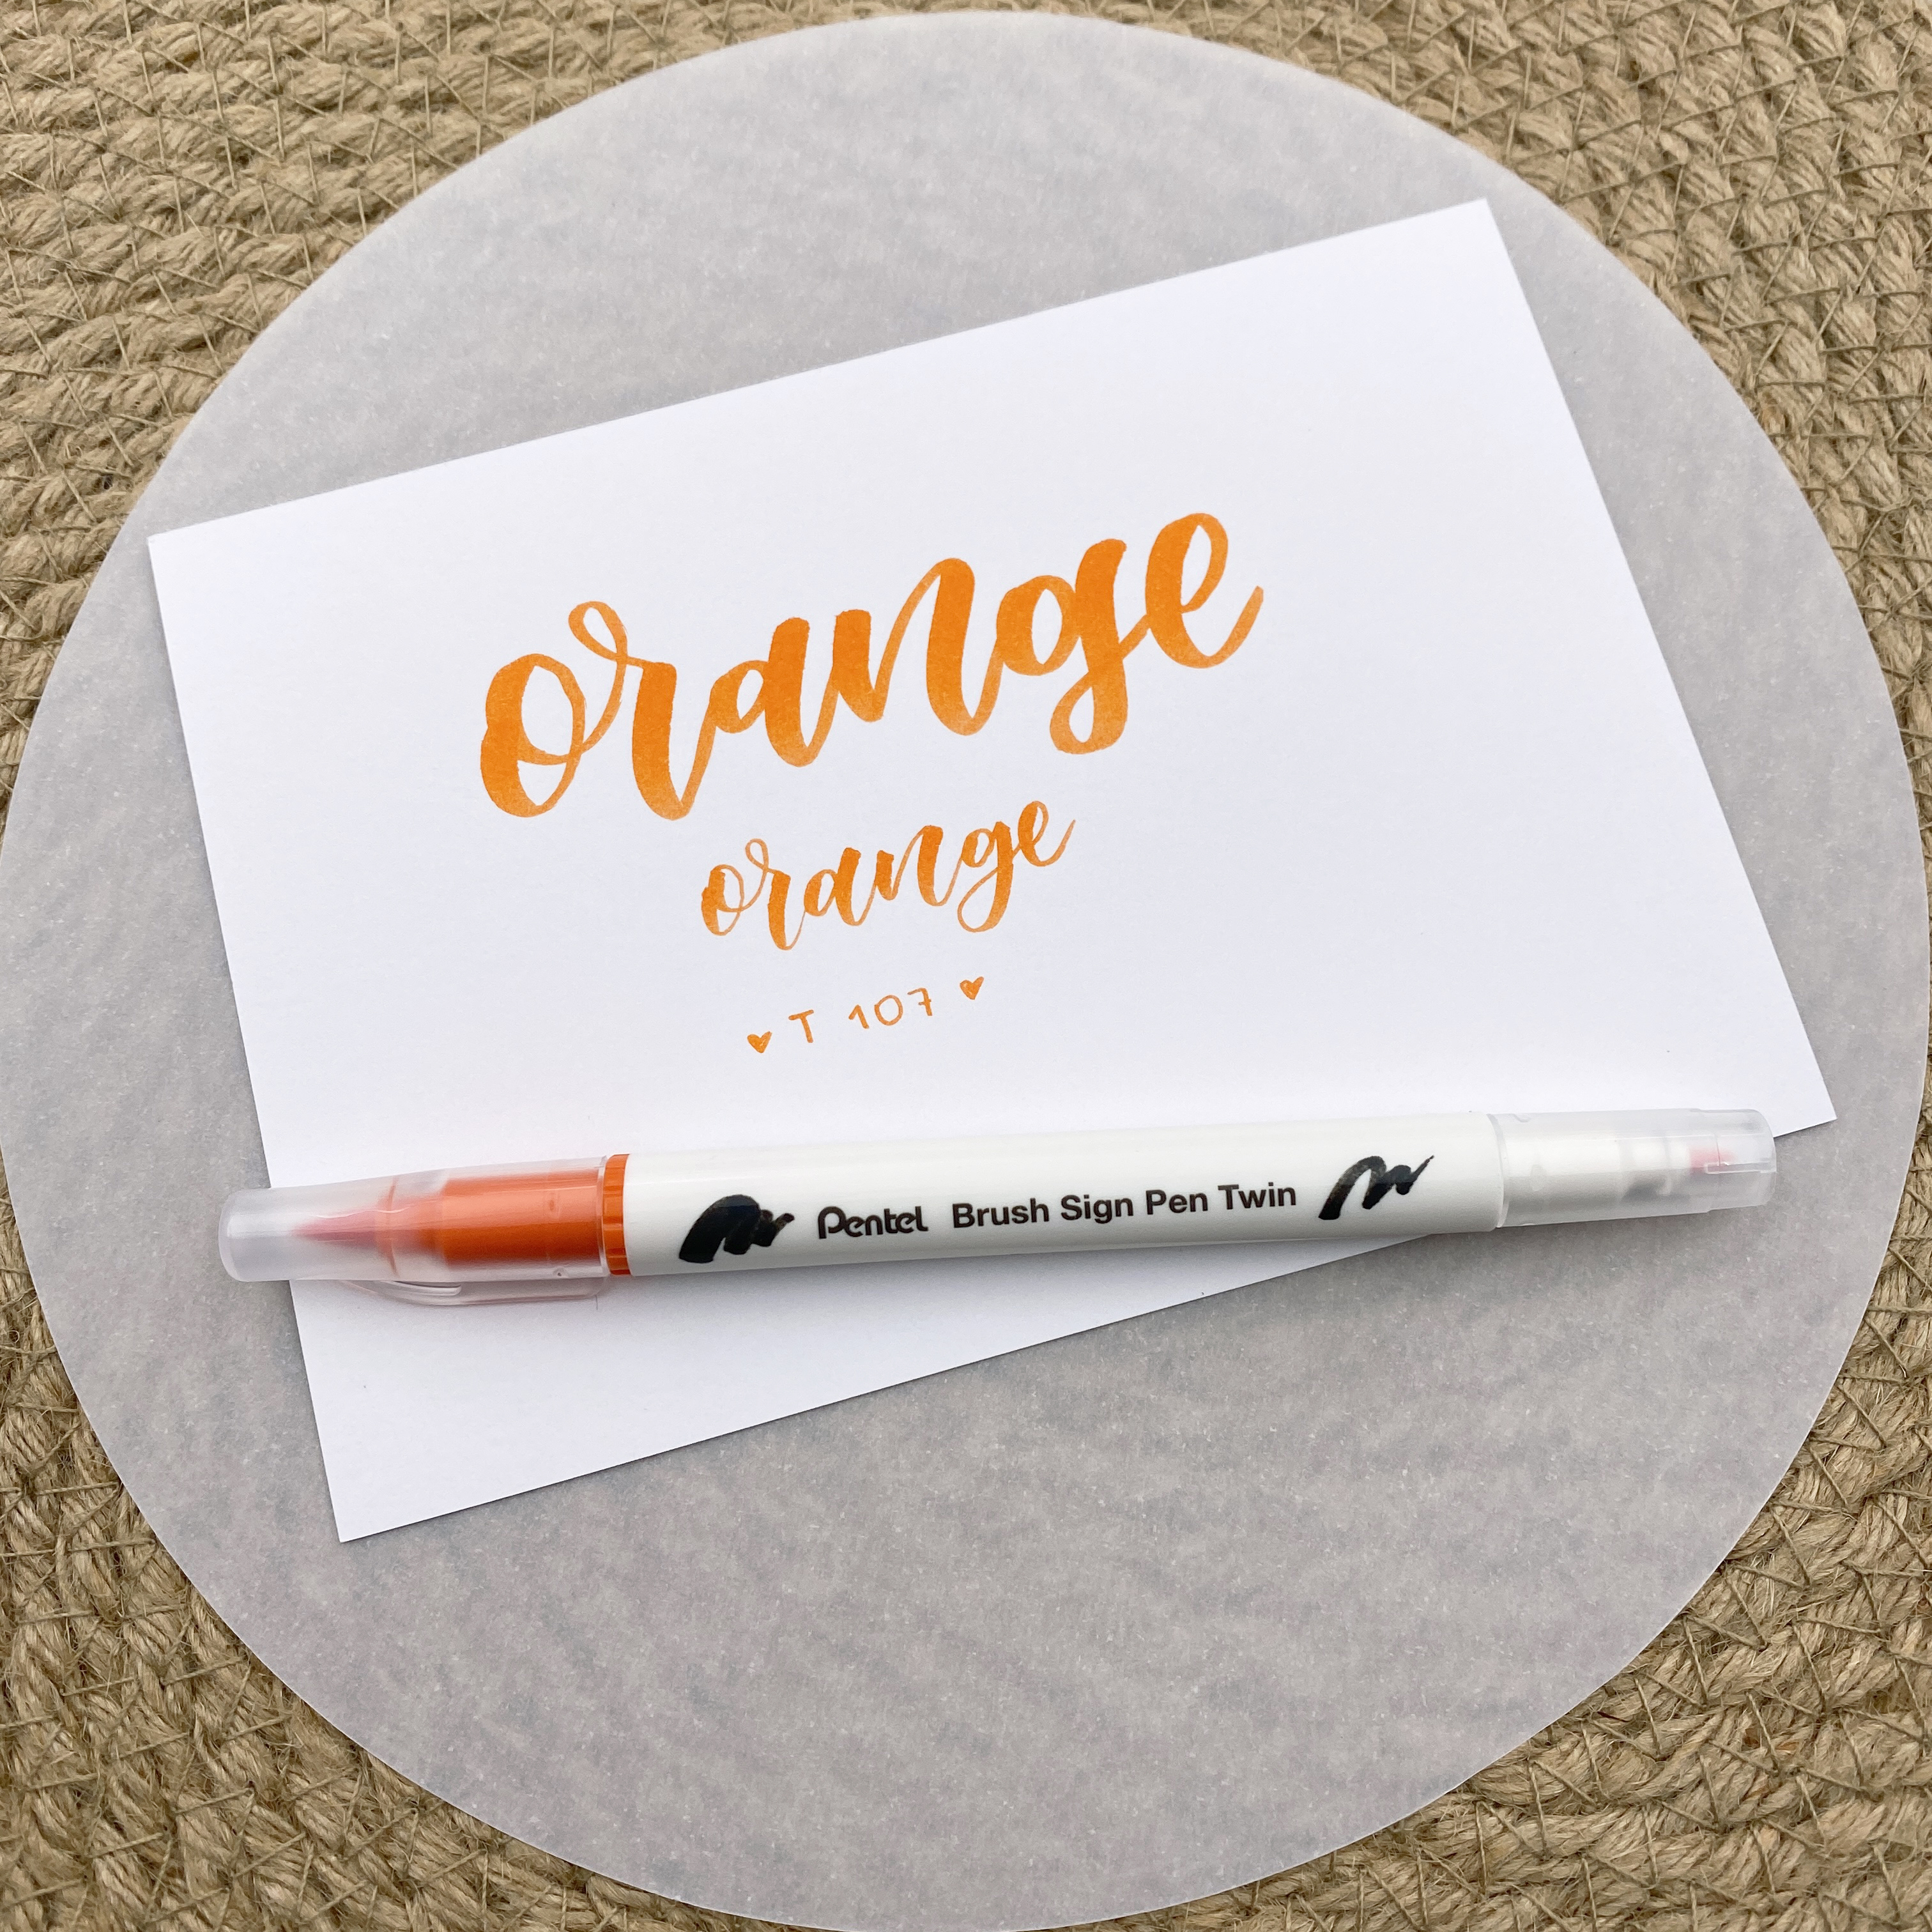 Pentel Brush Sign Pen Twin 107 Orange